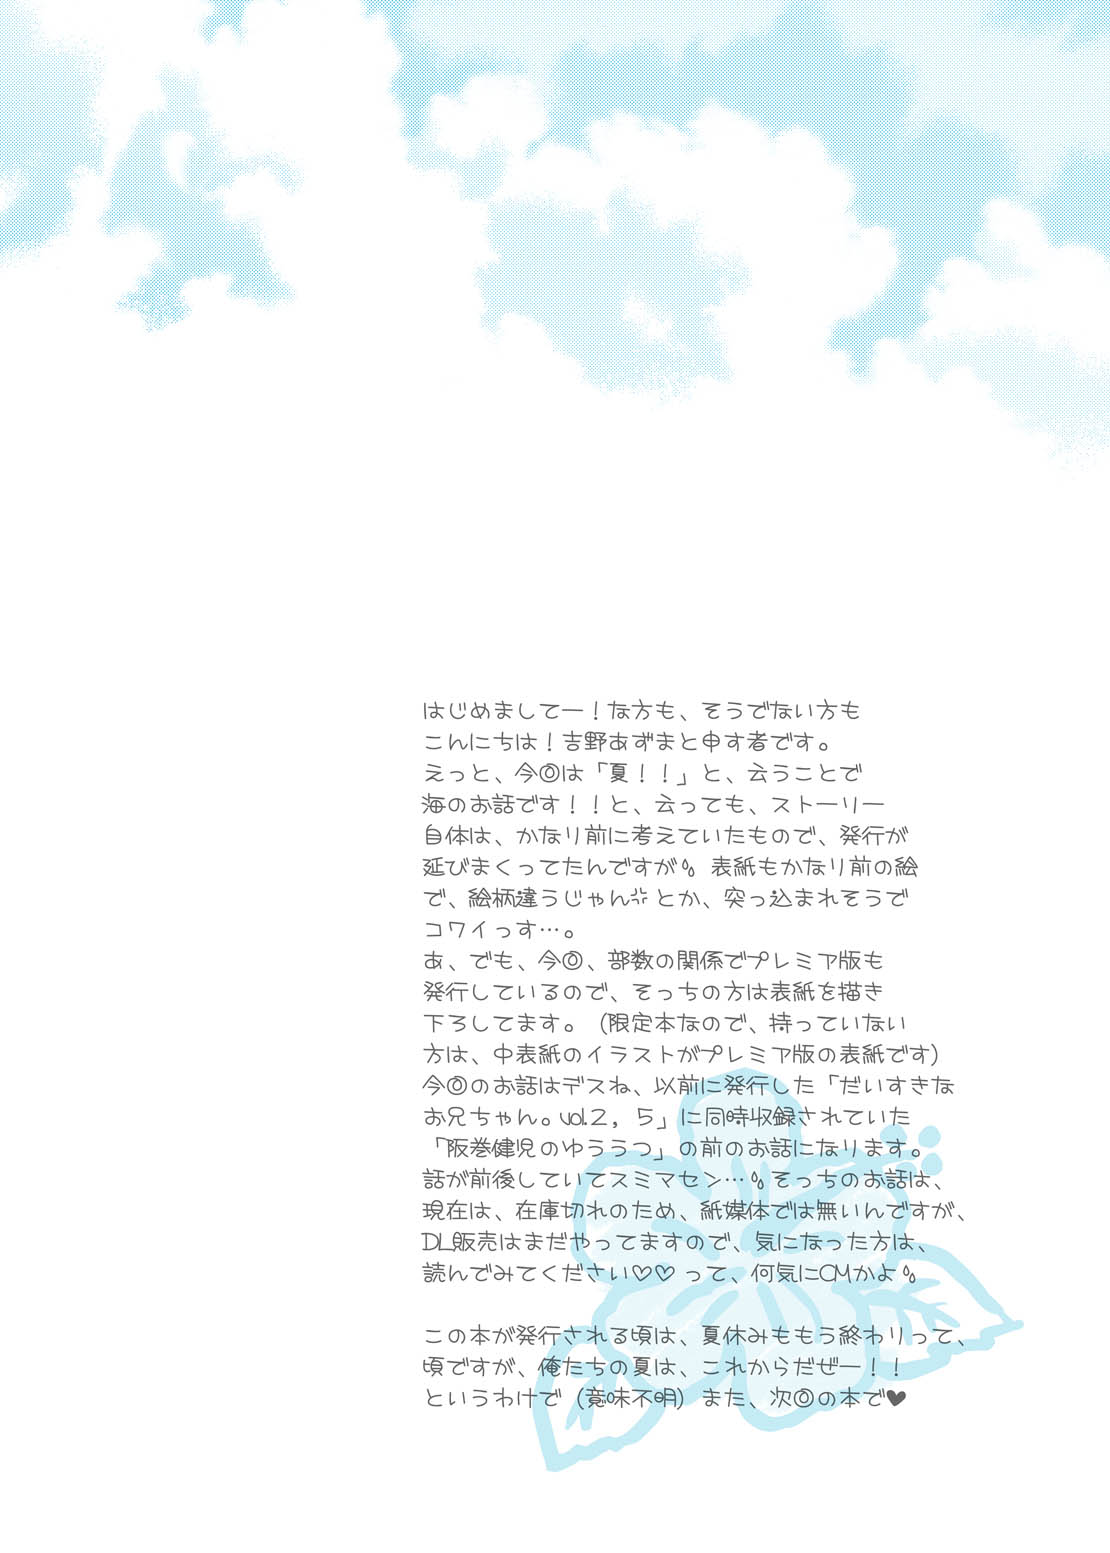 (C74) [××lazuli、DOING★CREW (吉野東)] Recollections of summer [英訳]